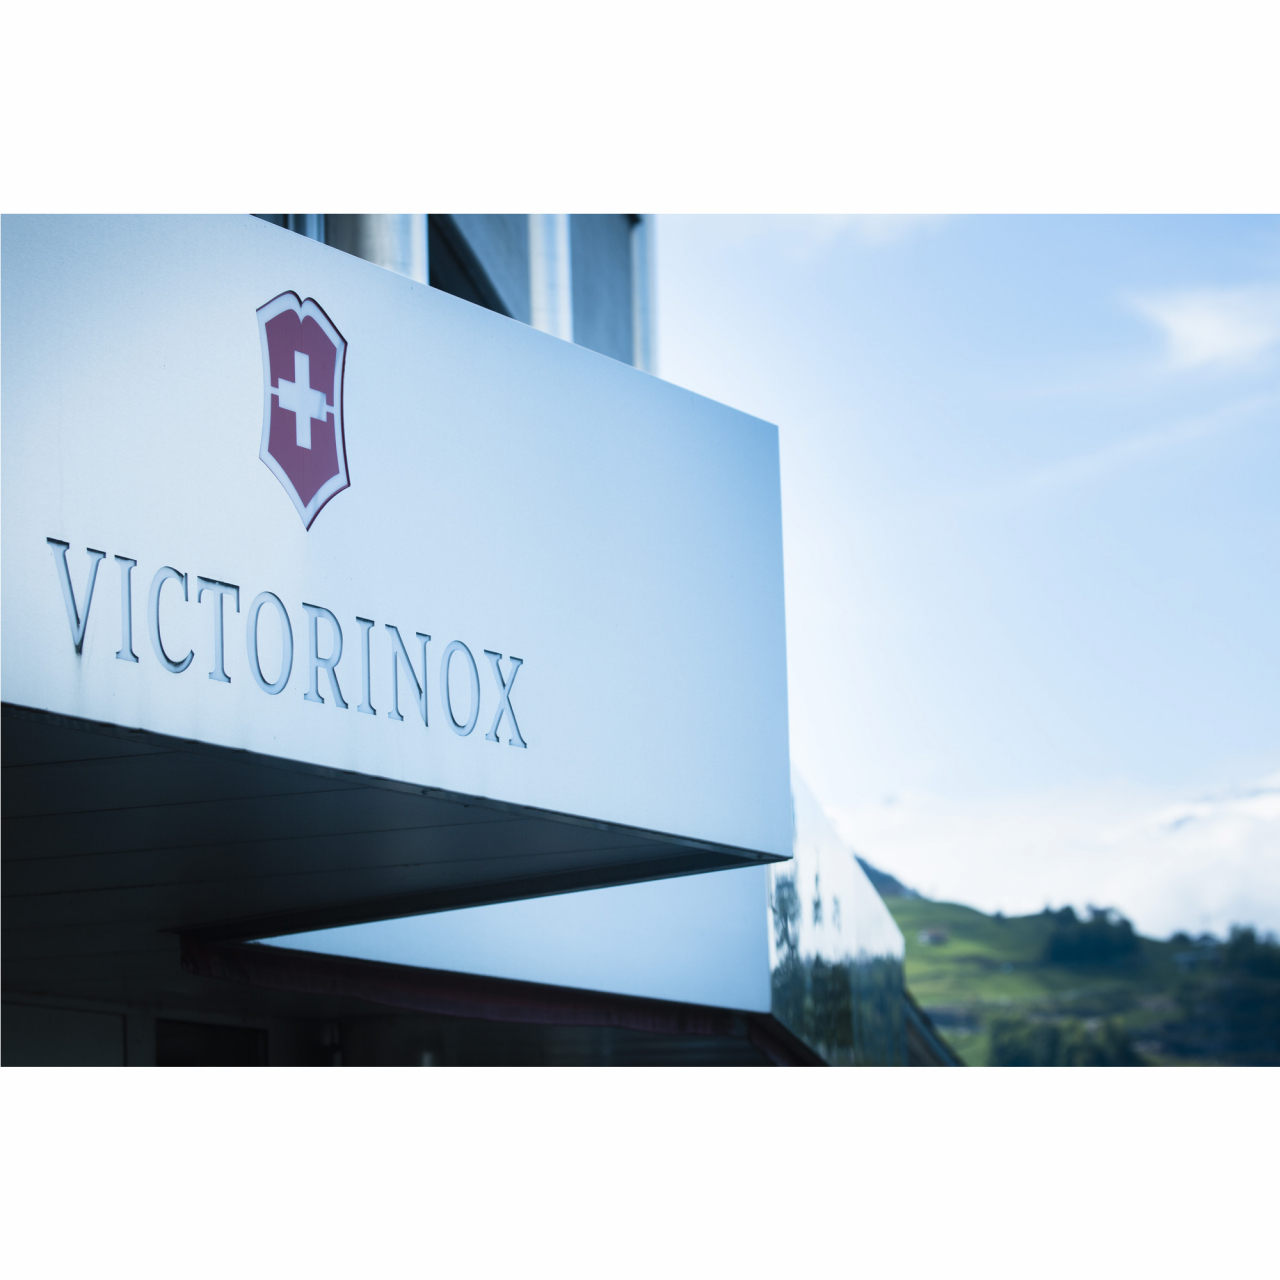 Victorinox's headquarters in Ibach, Switzerland (Victorinox)